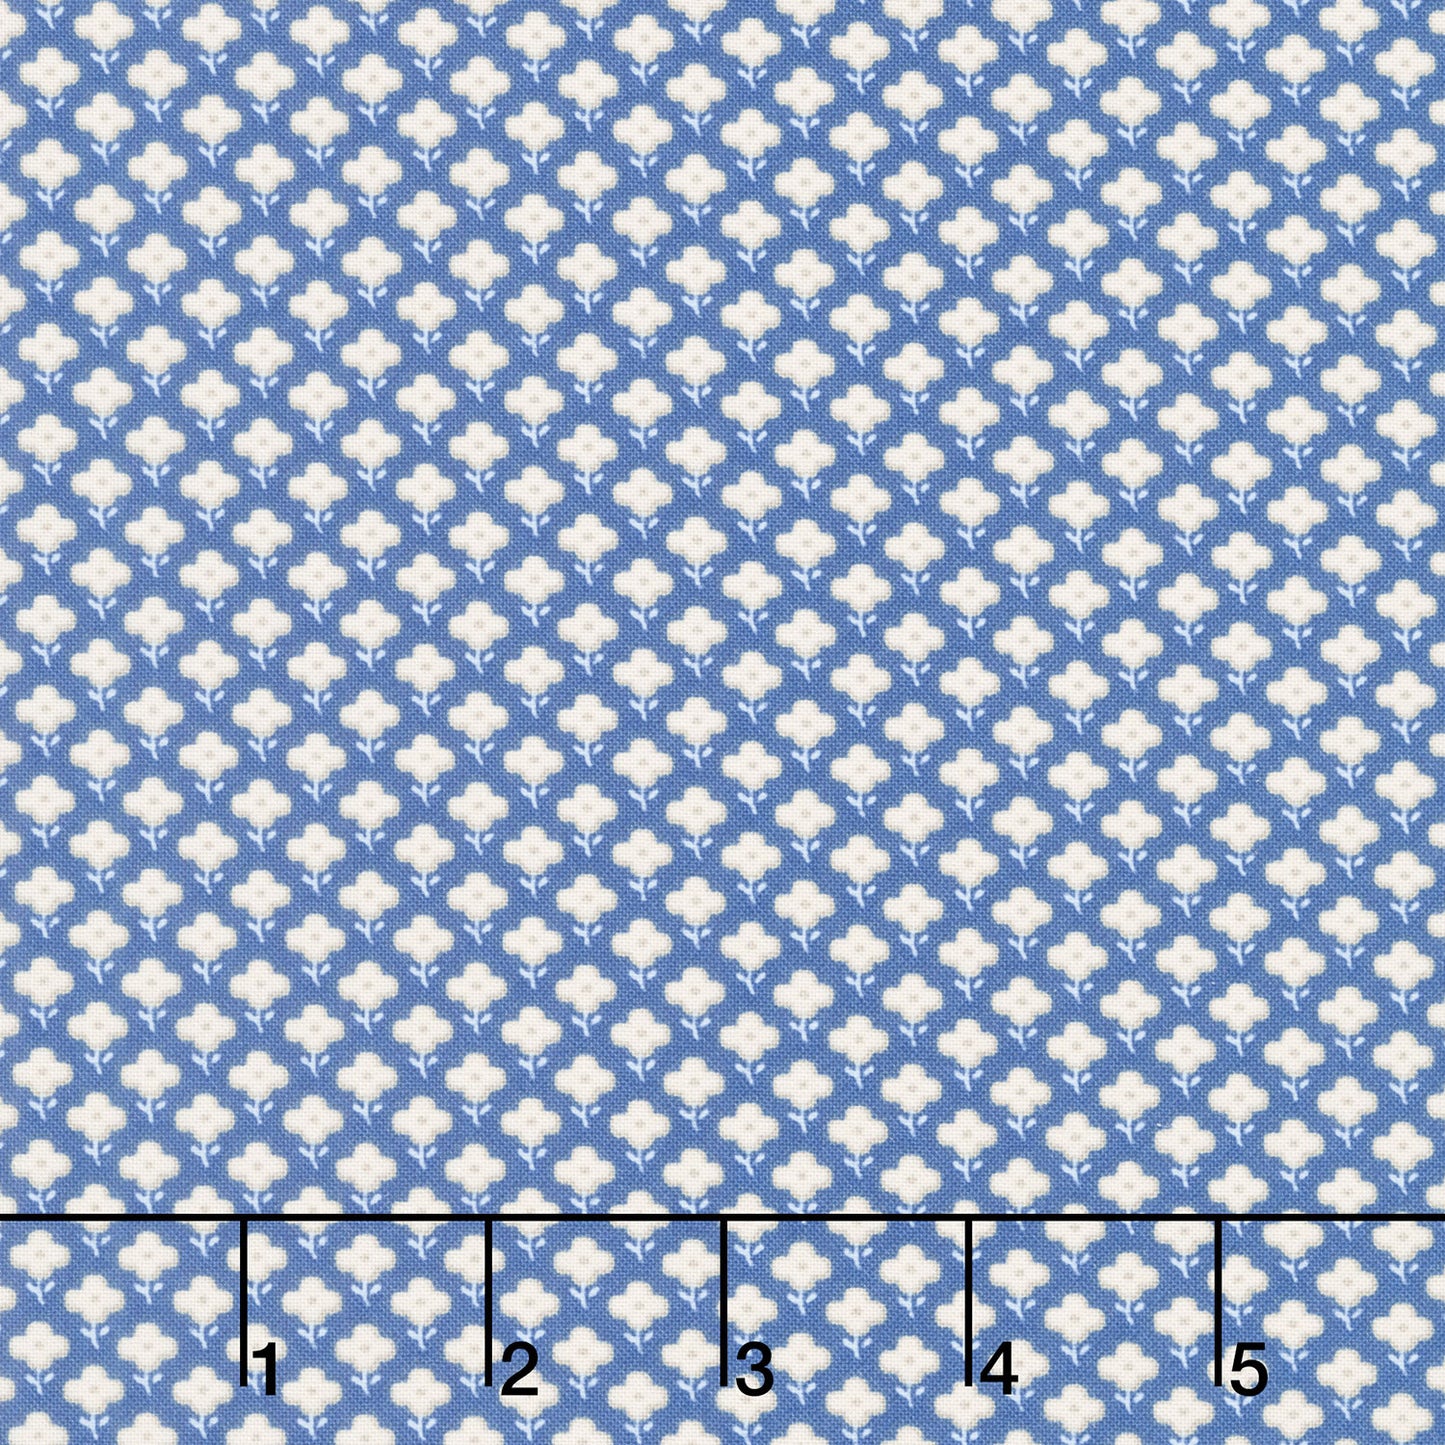 French Quarter - Flower Pattern Blue and Cream Yardage Primary Image